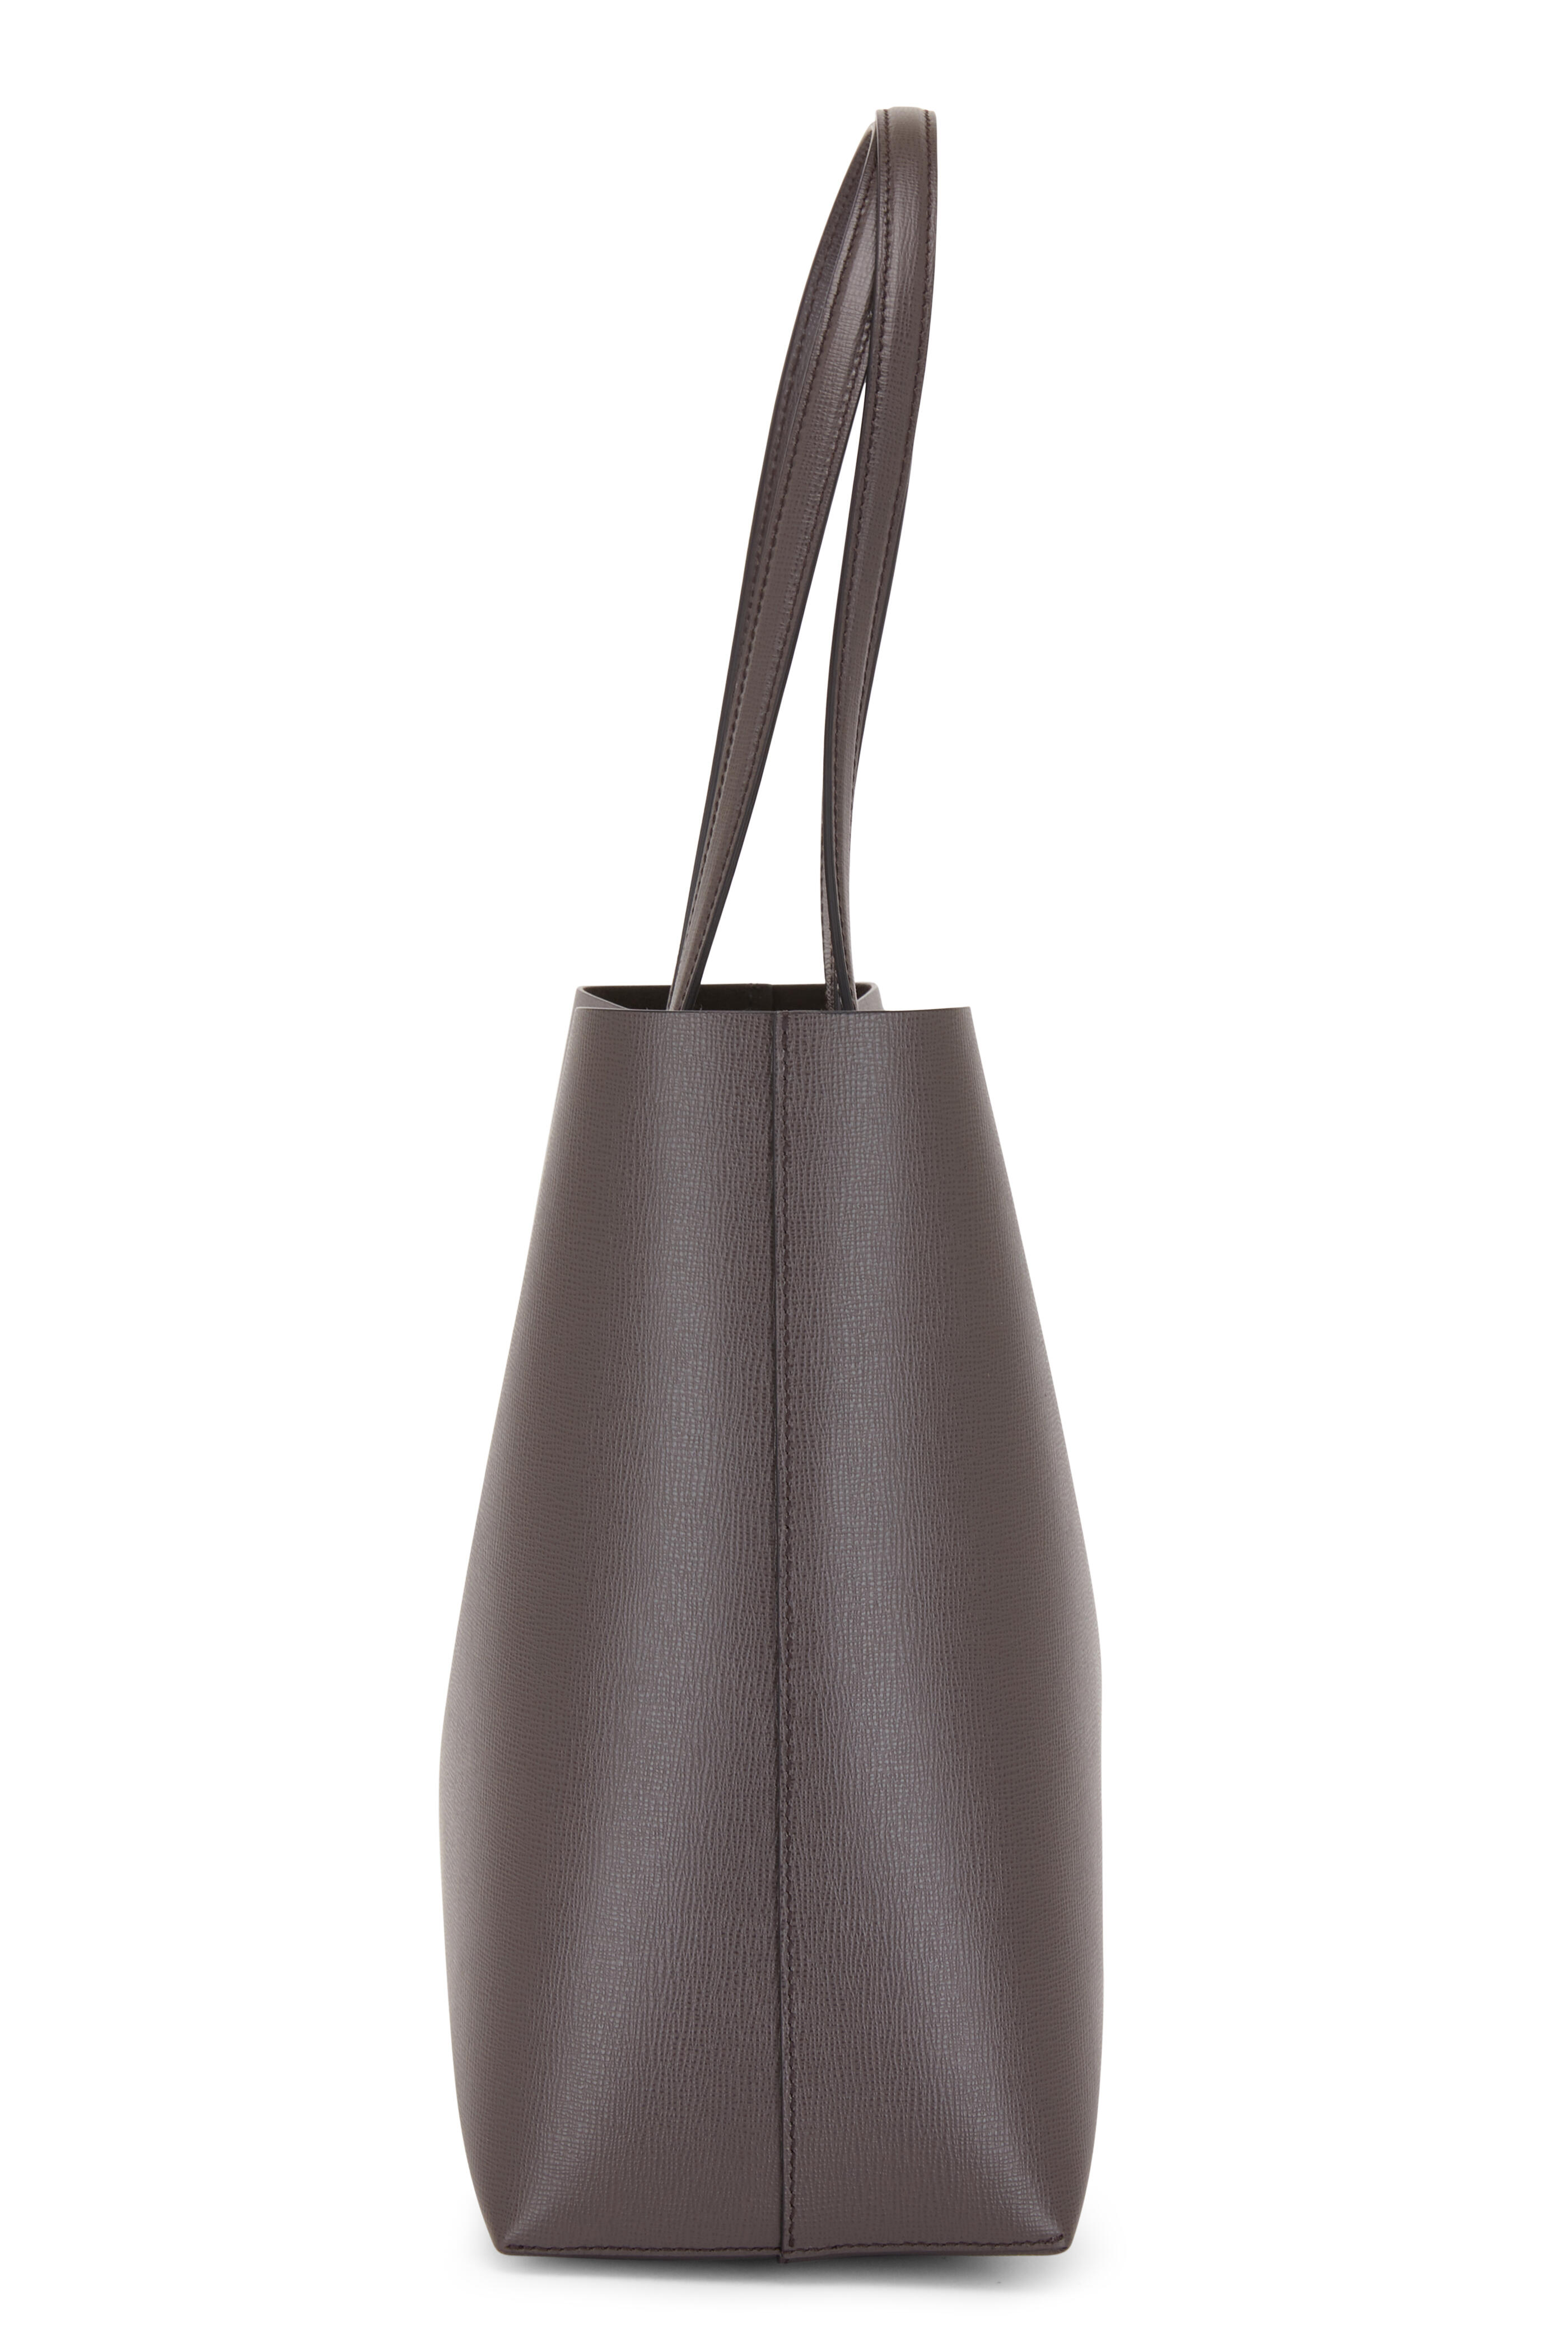 Small Reversible Tote Handbag - A New Day Black/Brown 1 ct